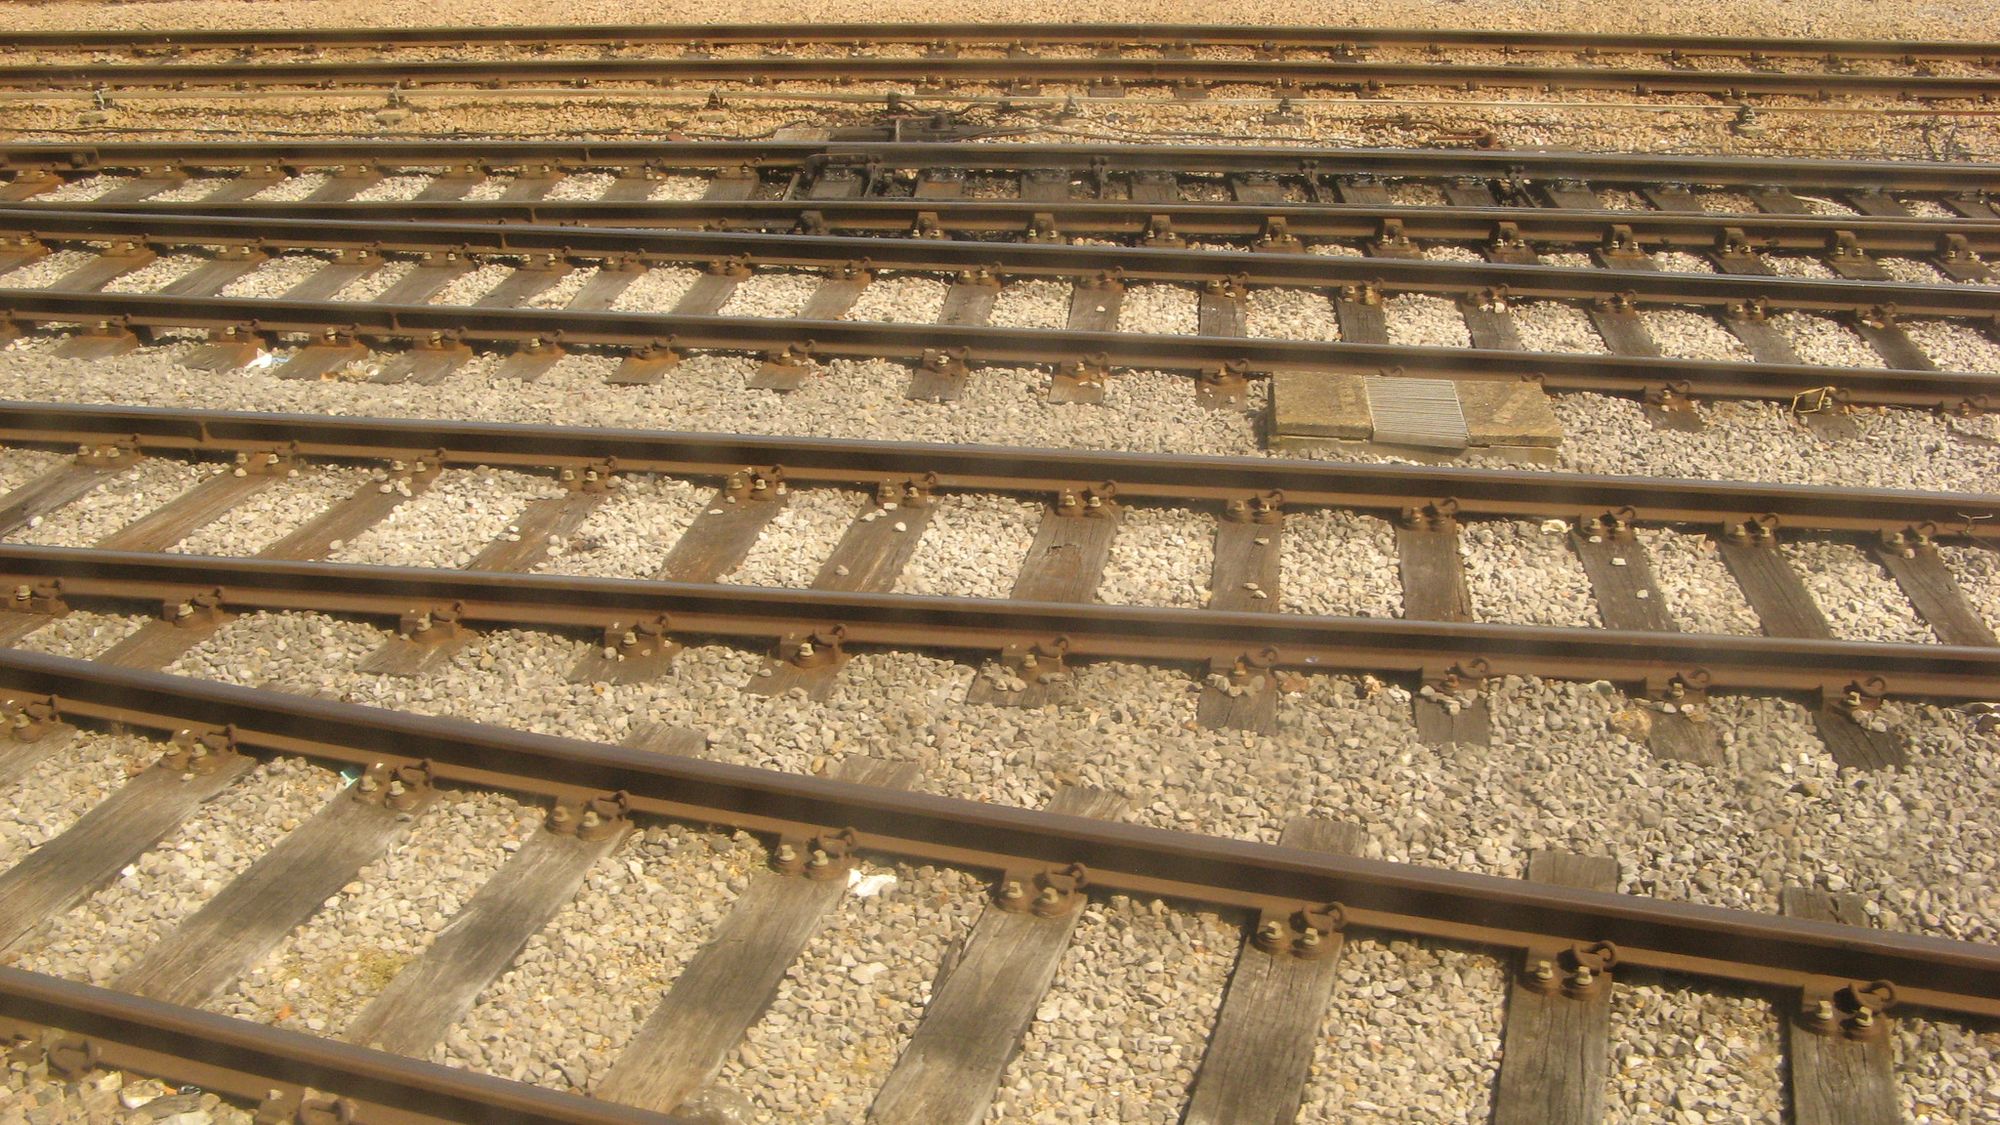 A photo of railway tracks.